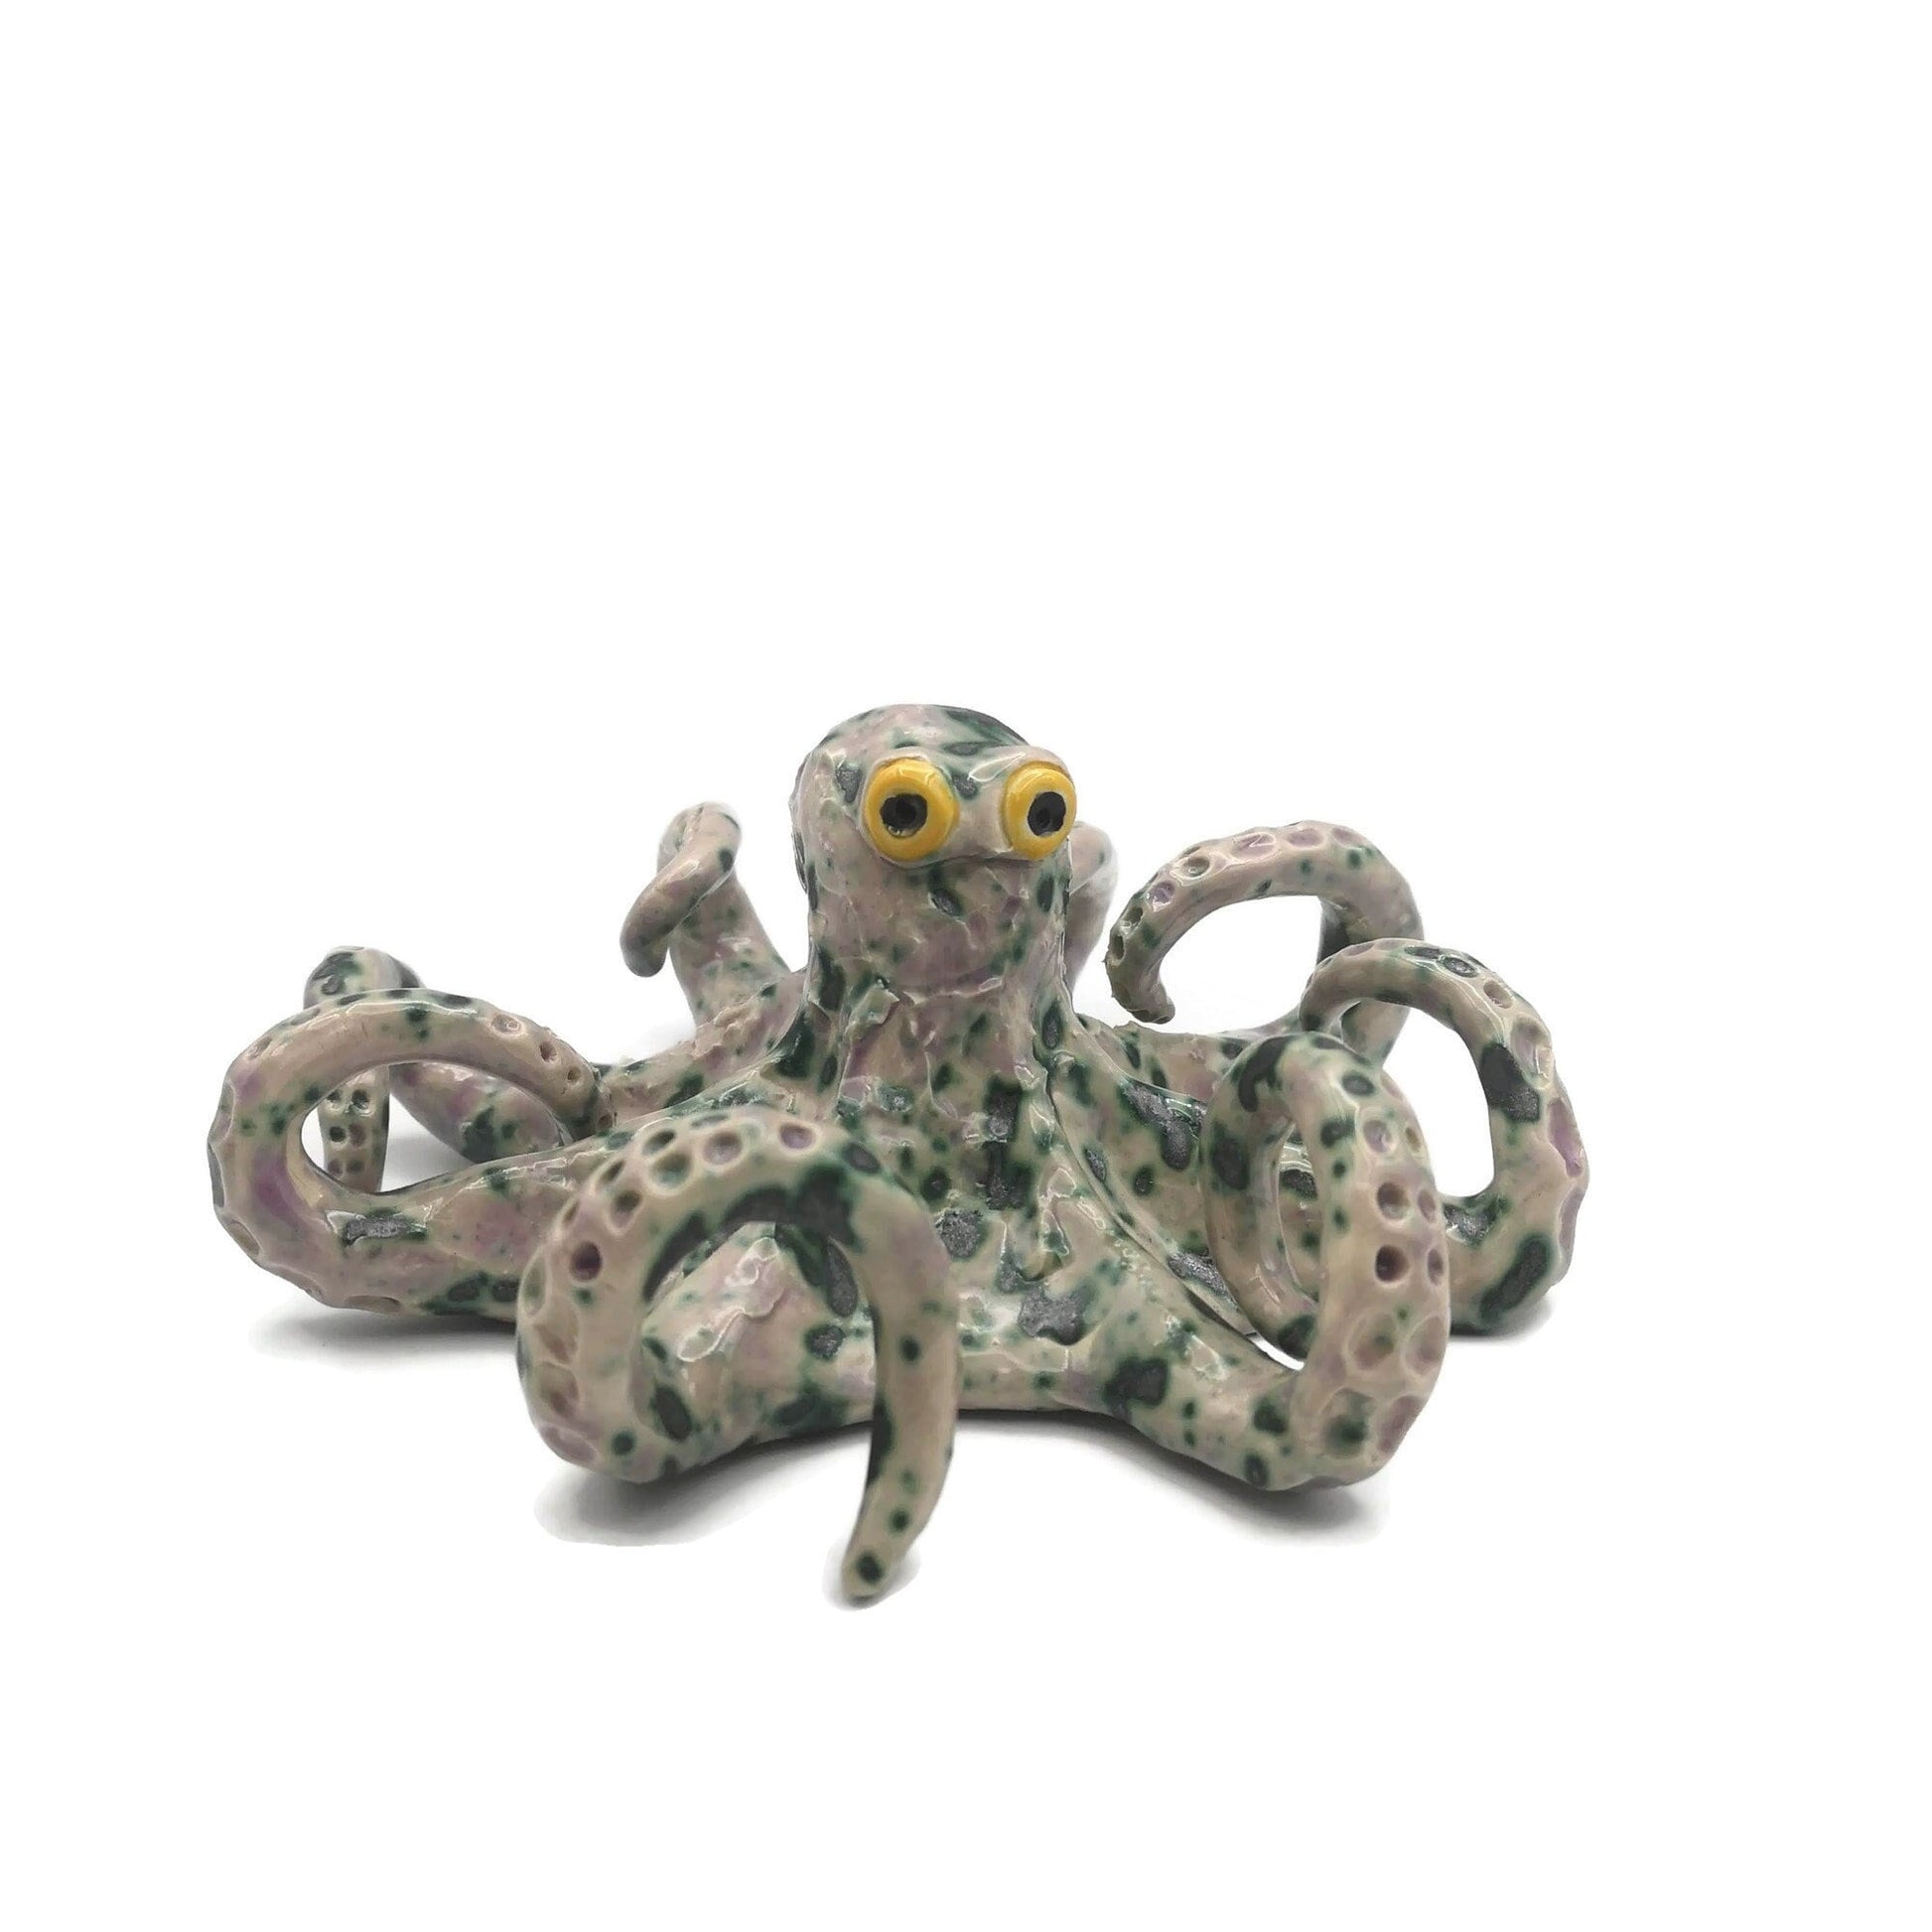 Modern Handmade Ceramic Octopus Sculpture, Pale Pink Octopus Coastal Art, Contemporary Wedding Gift For Couple, Decorative Table Sculpture - Ceramica Ana Rafael